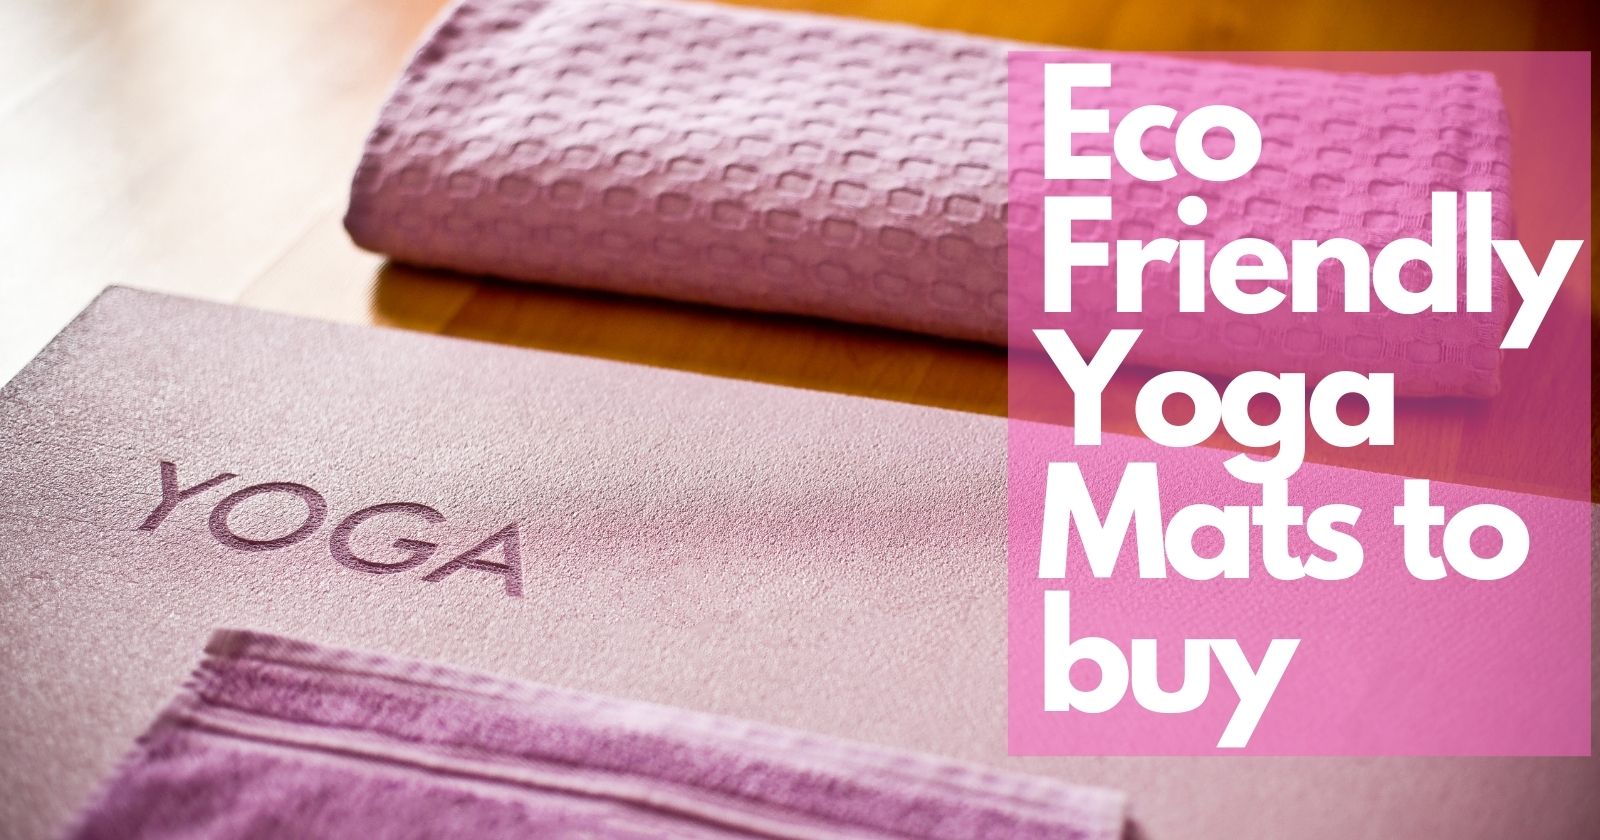 Eco Friendly Yoga Mats to buy